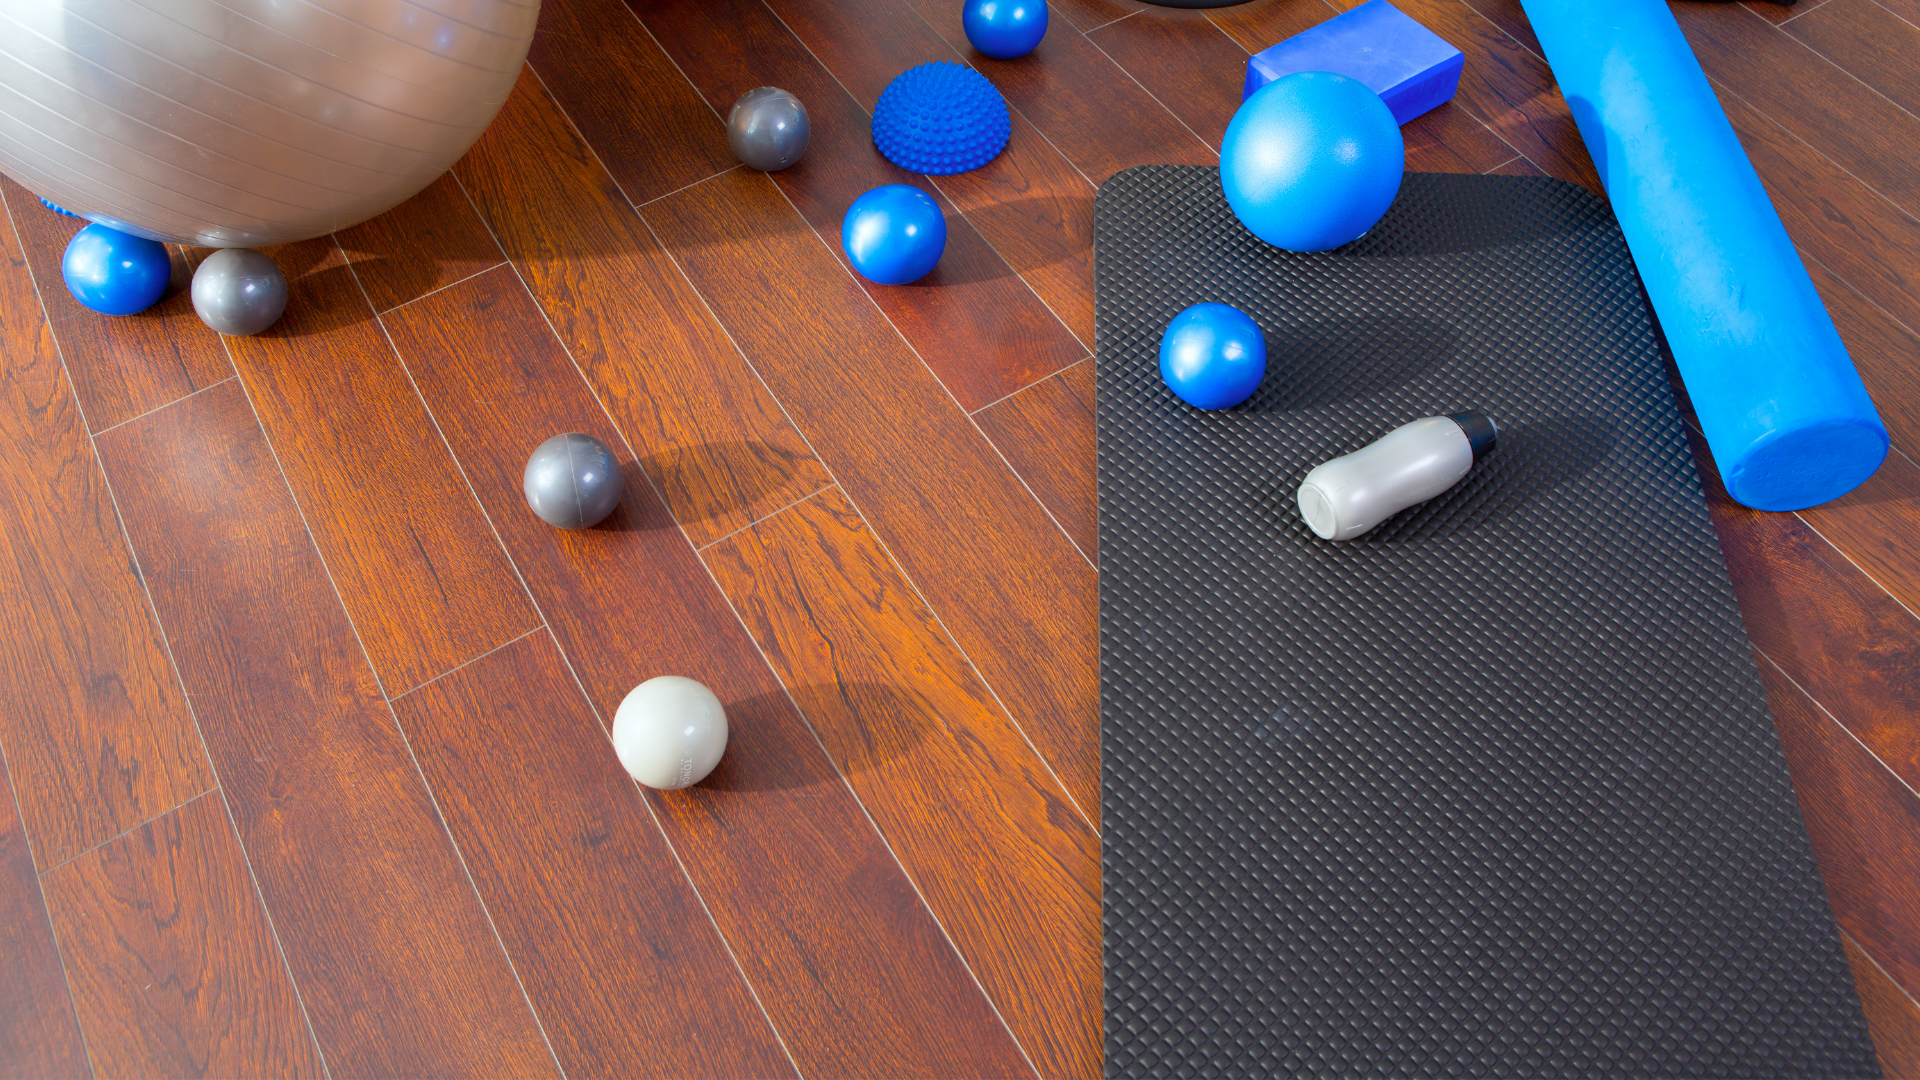 A yoga mat, foam roller and different sized sport balls.